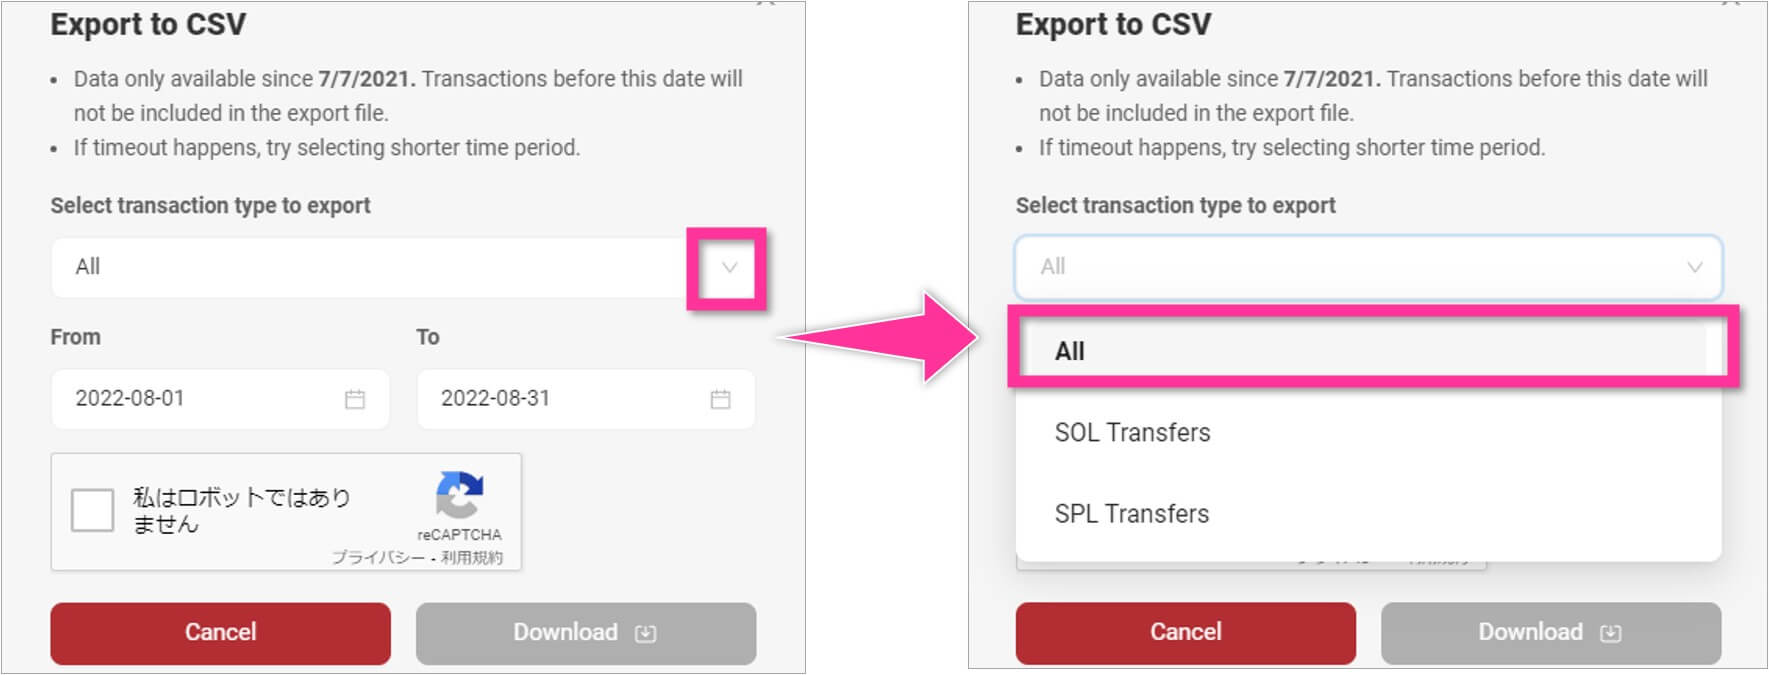 「Export to CSV」を押した後の確認画面